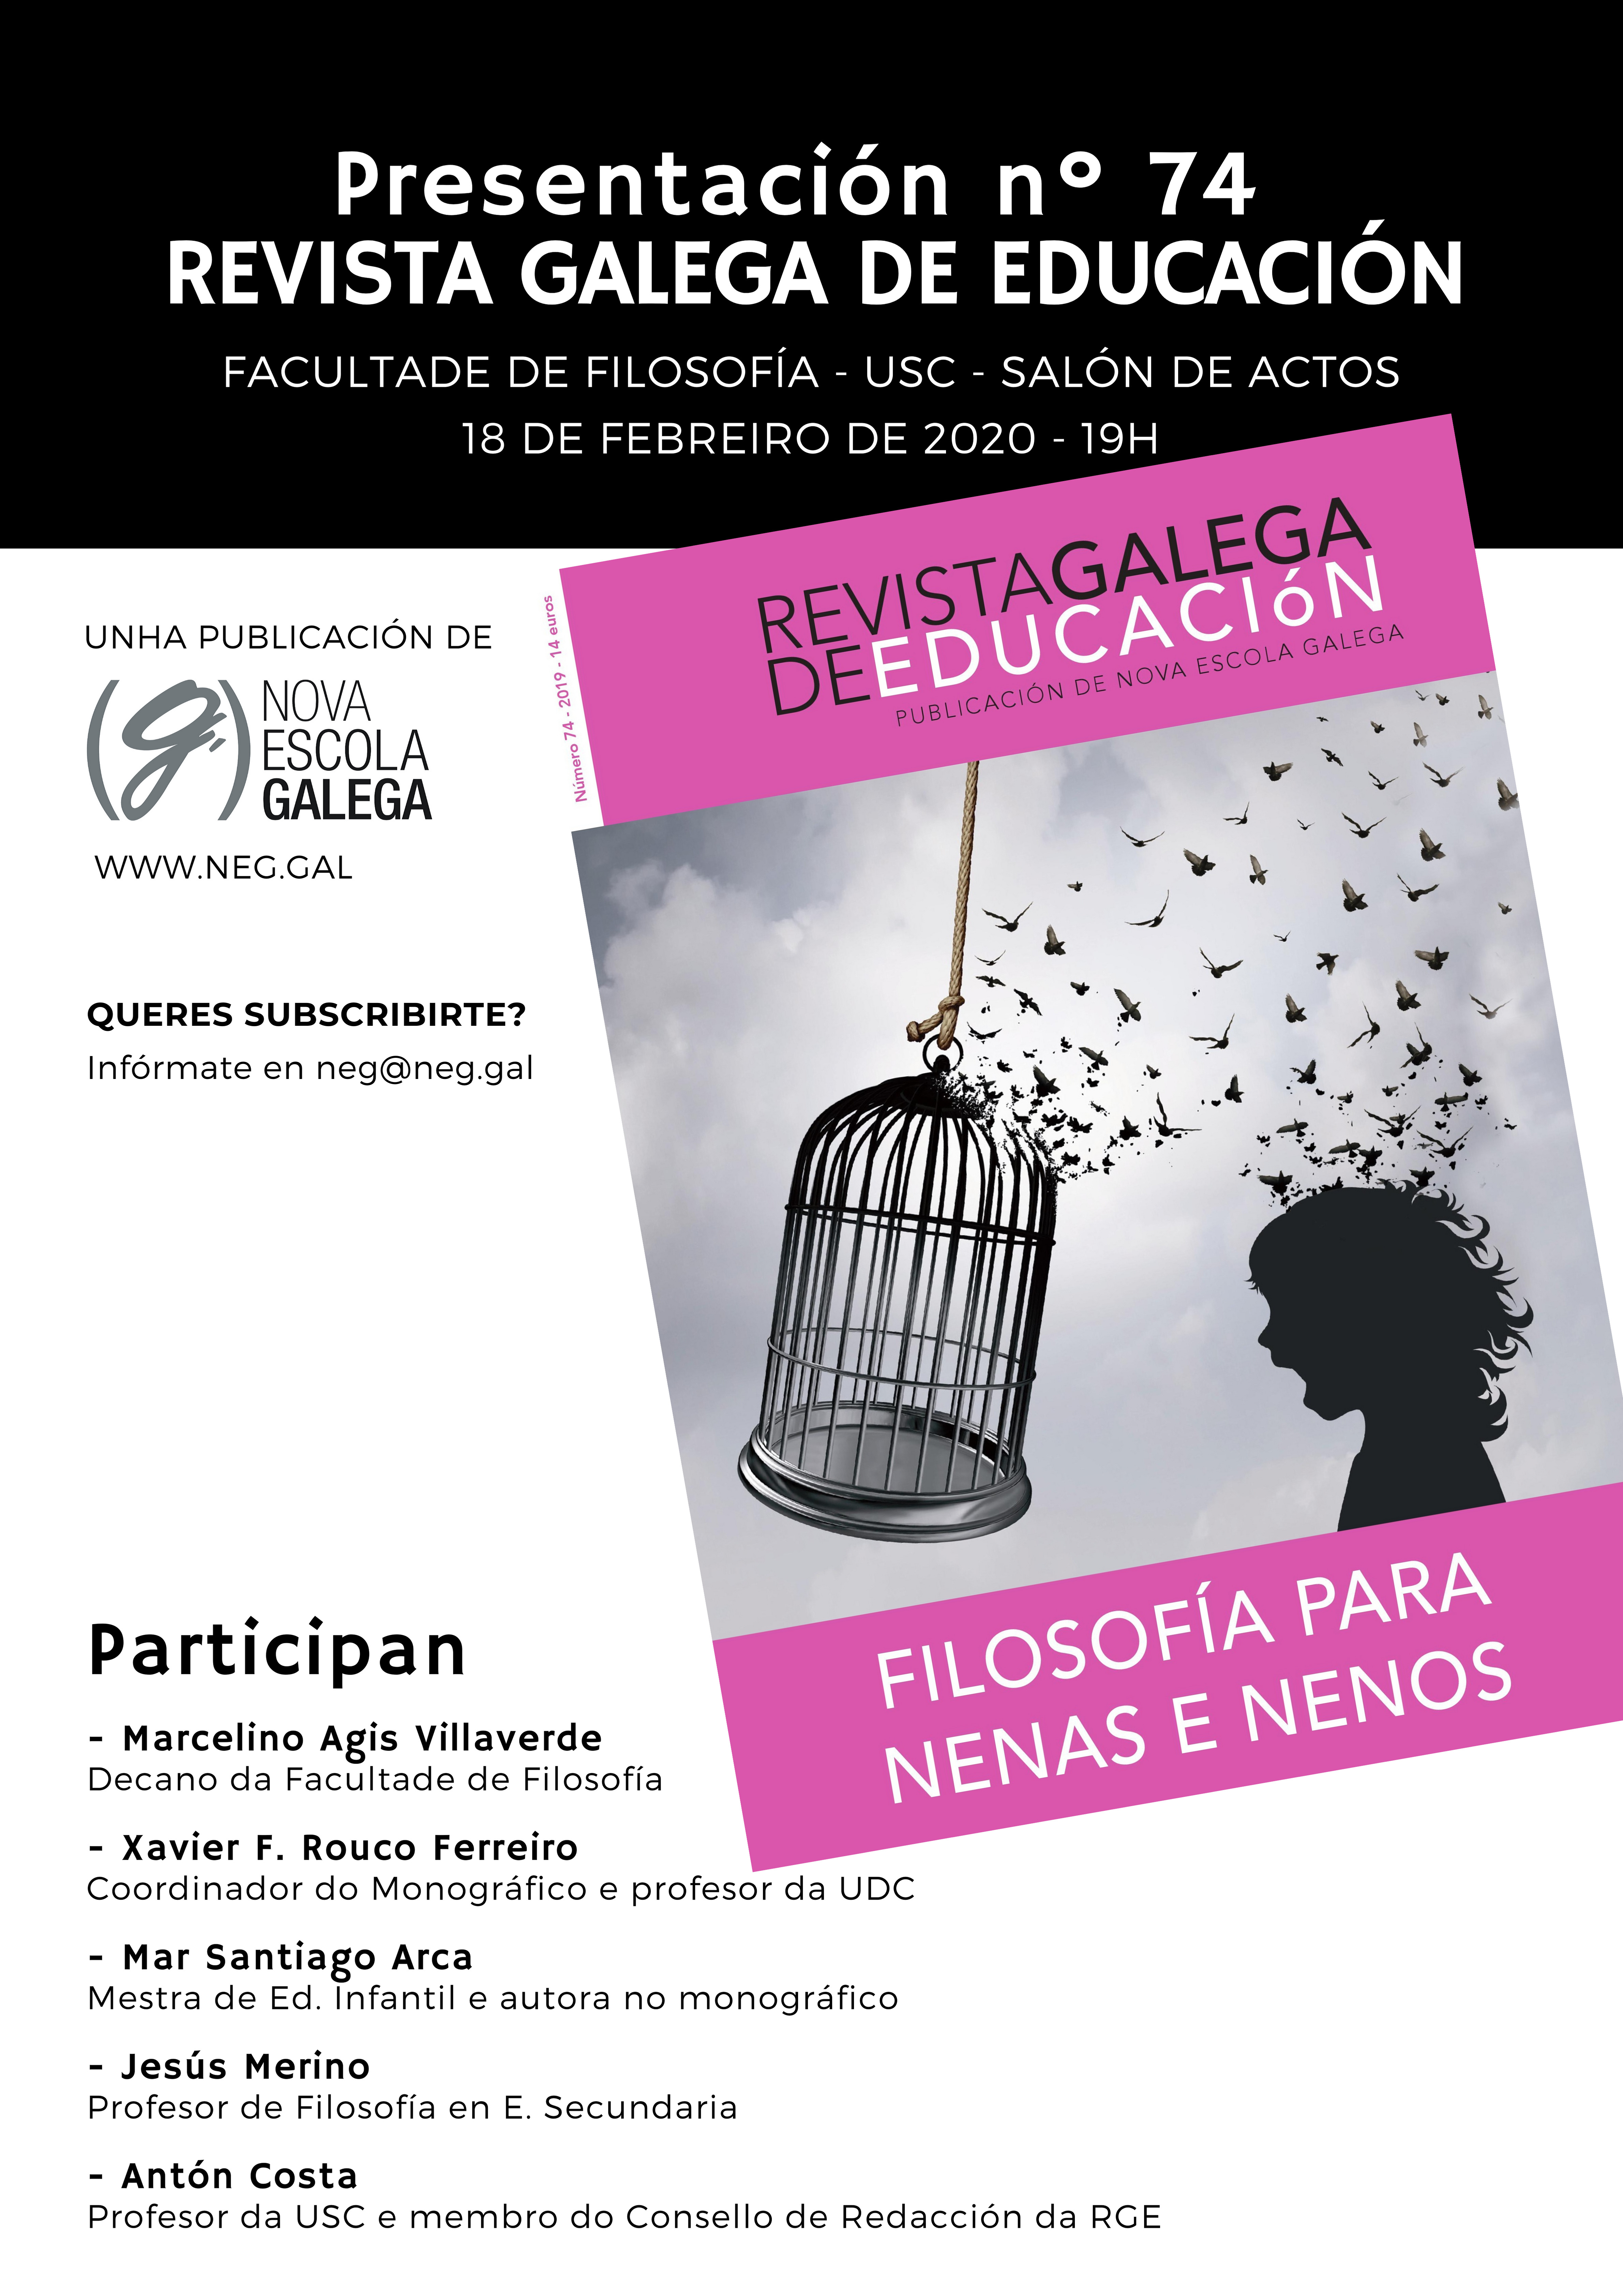 http://www.nova-escola-galega.org/almacen/documentos/PRESENTACION_RGE74_SANTIAGO.jpeg